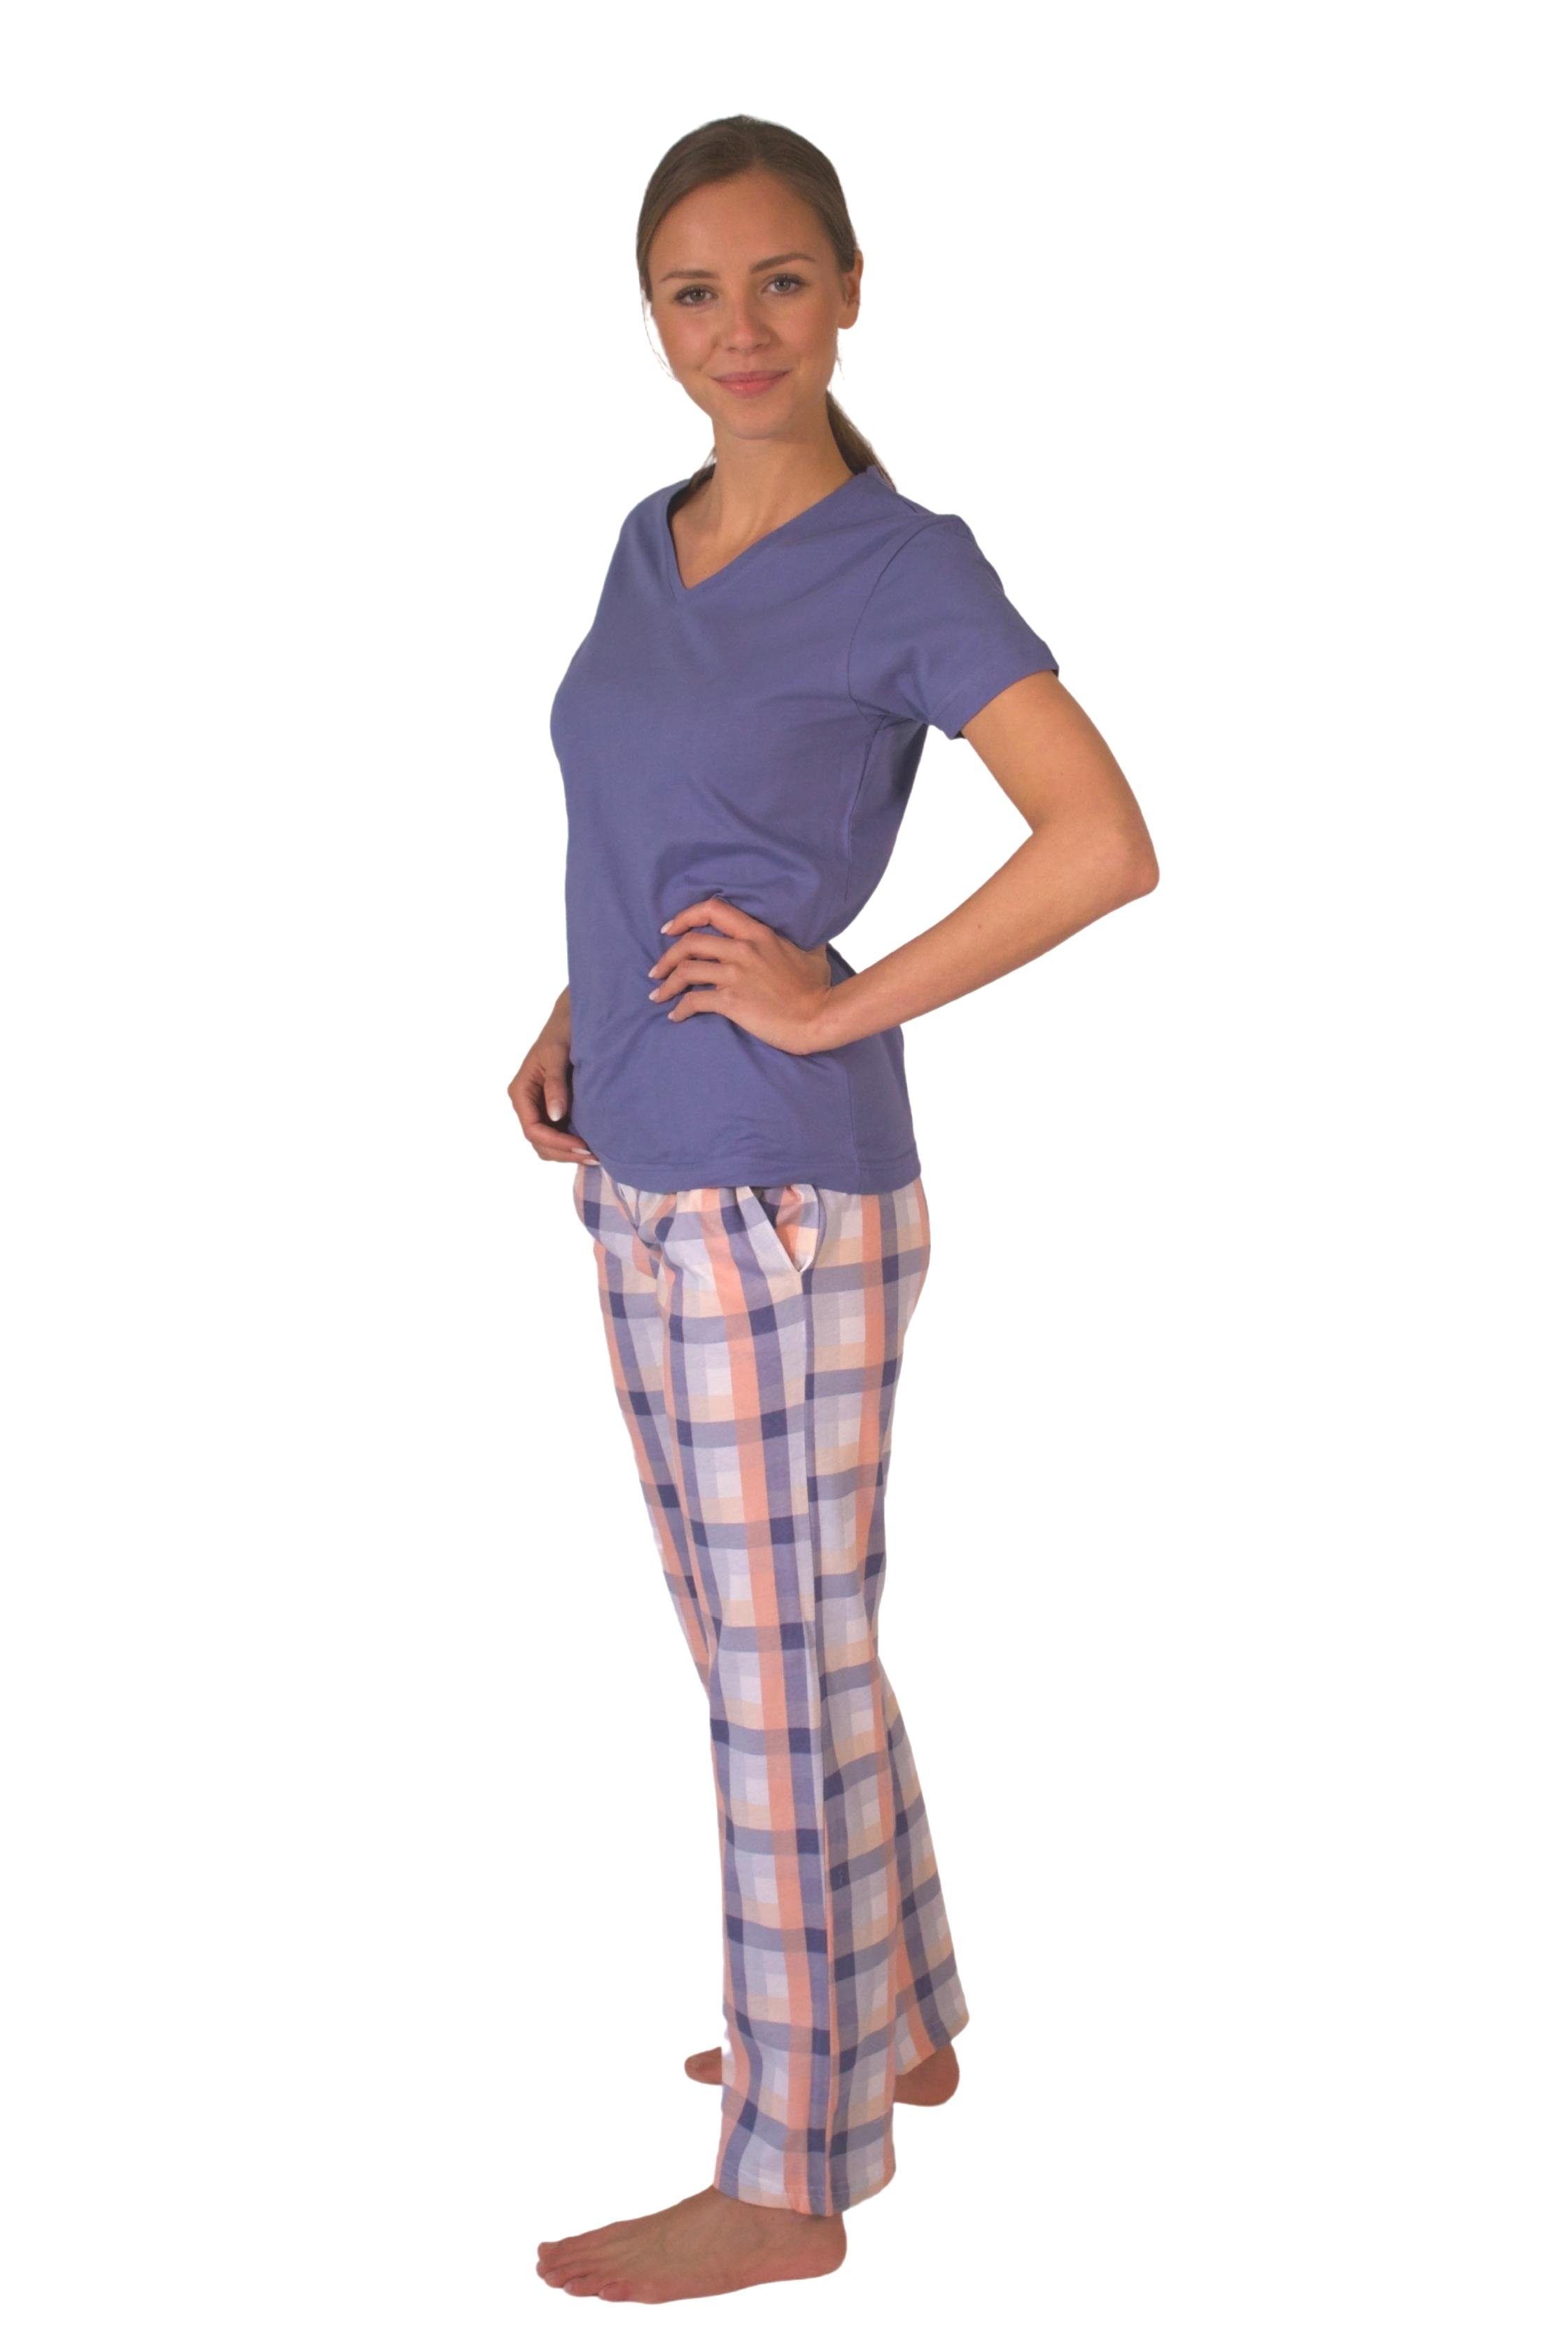 Lange amen Hose Pyjama Pyjama Consult-Tex SUN9 Schlafanzug